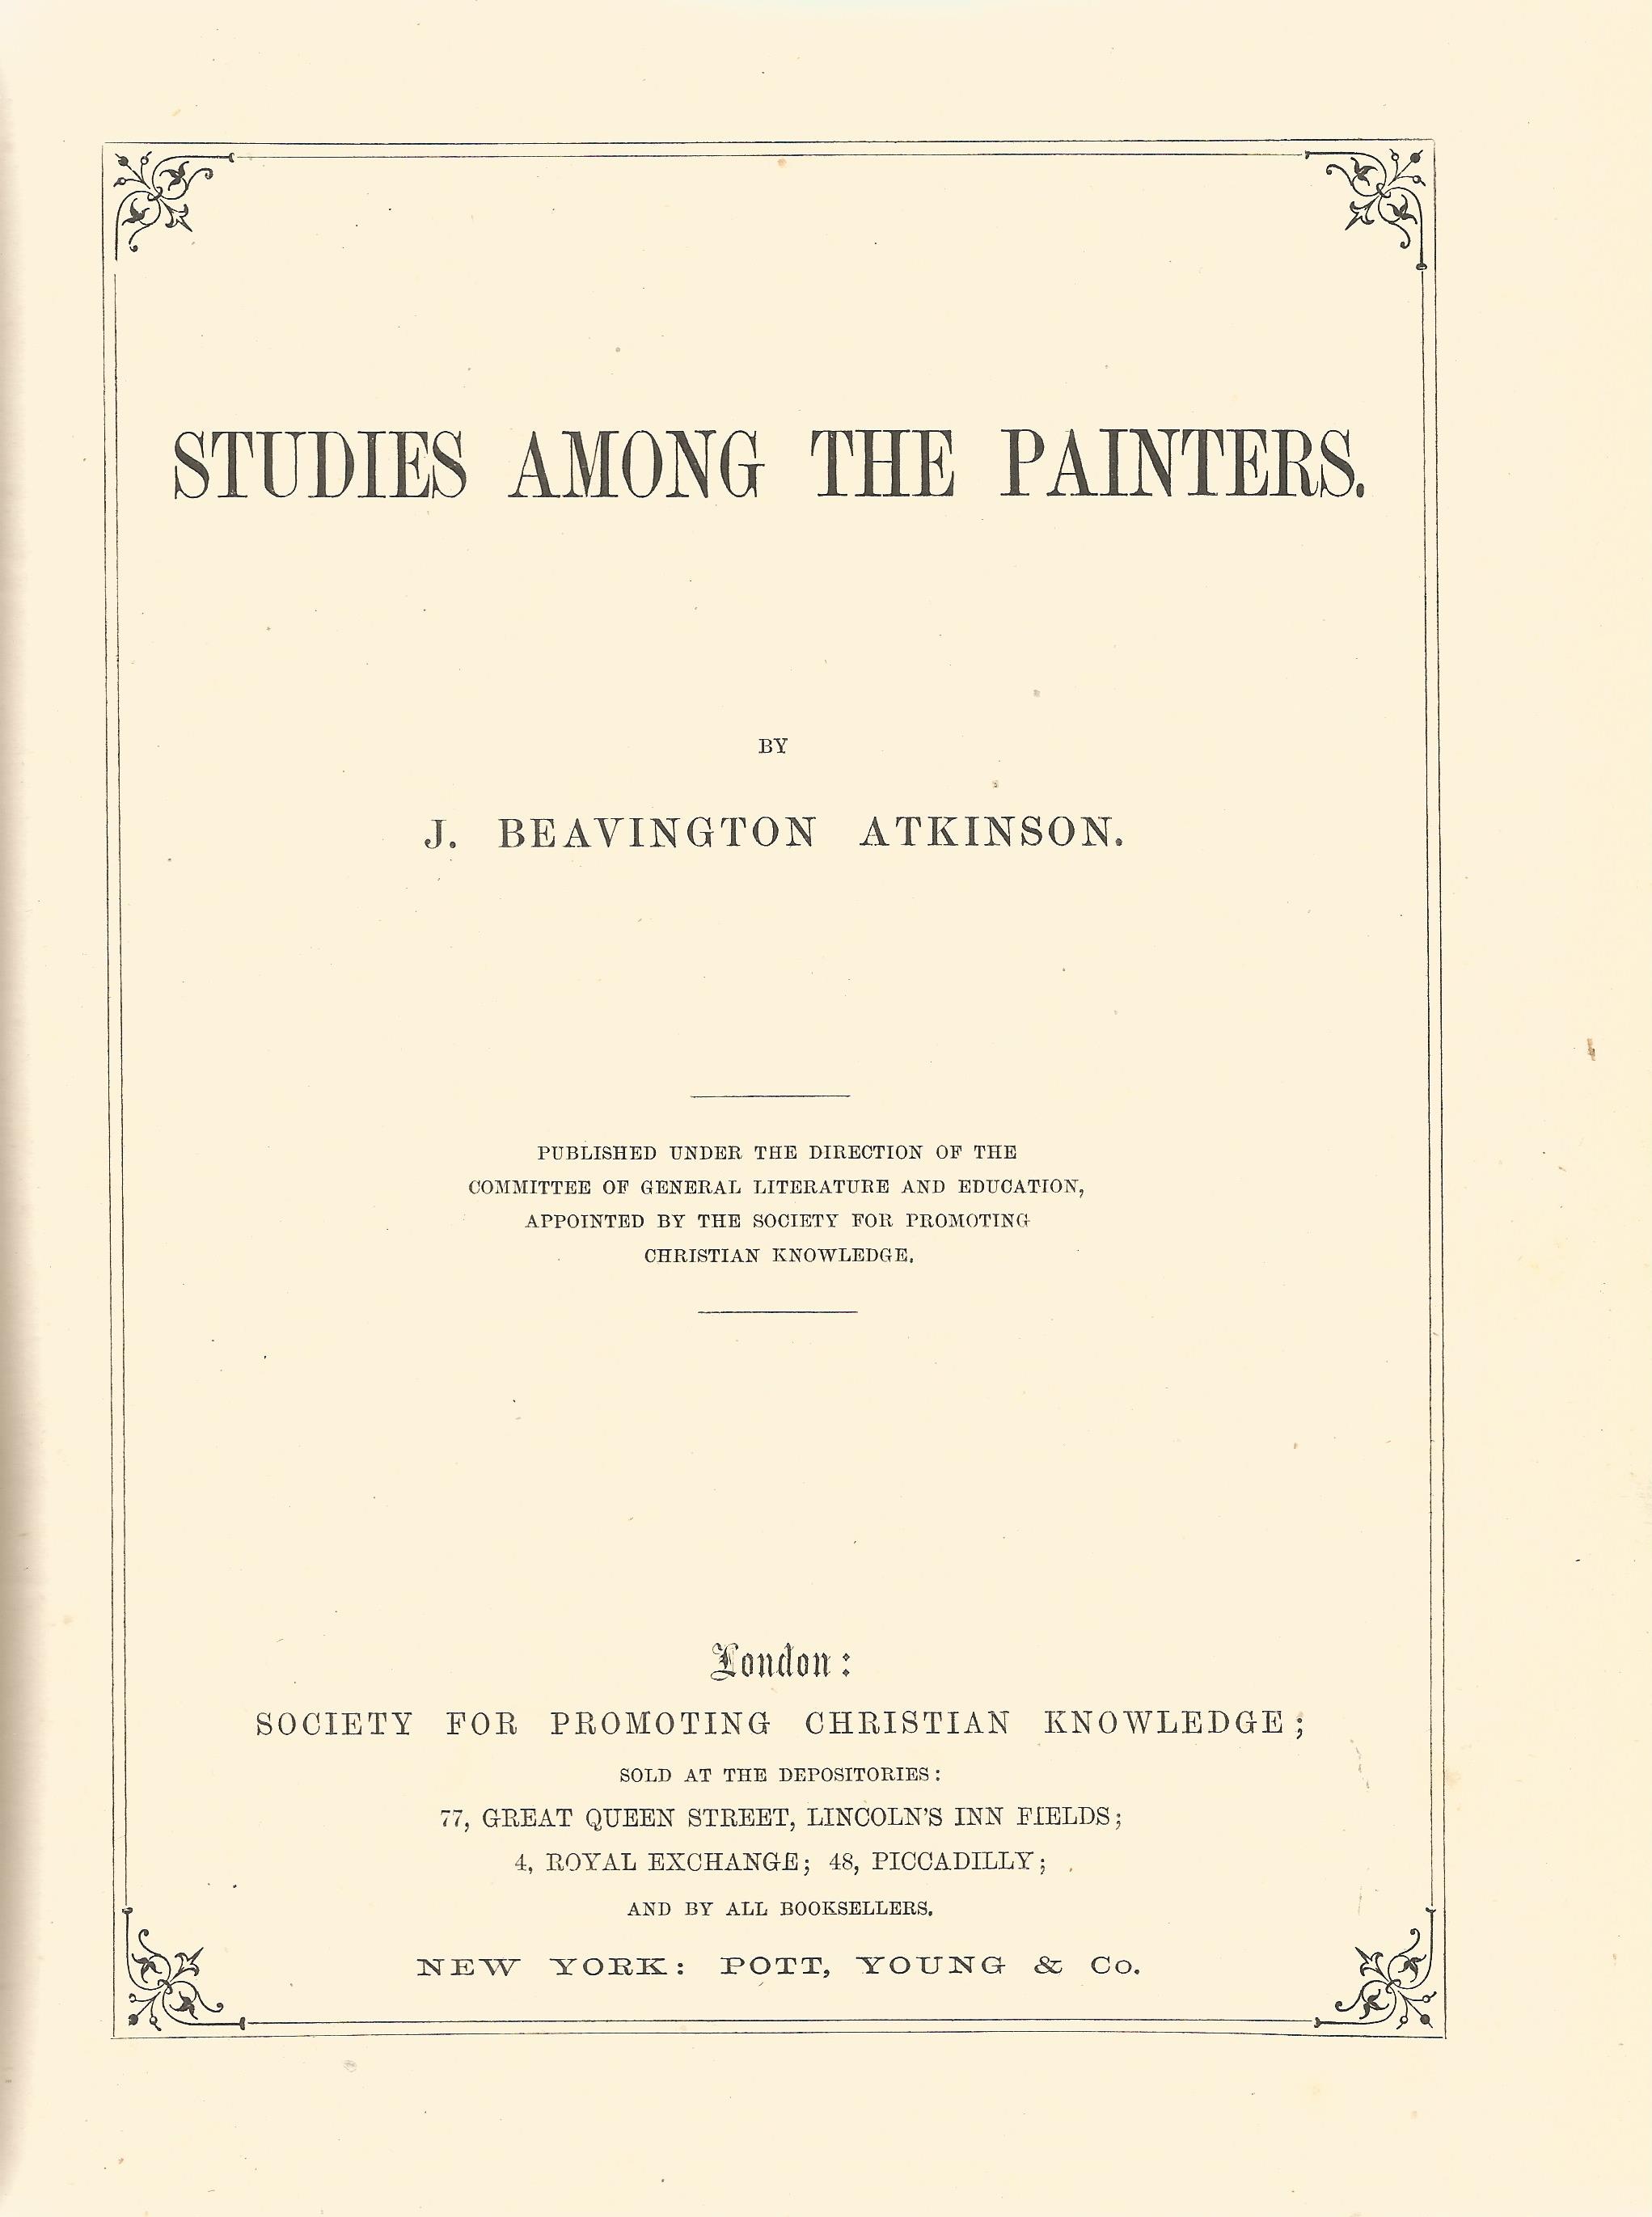 J. Beavington Atkinson hardback book Studies among the Painters by J. Beavington Atkinson - Image 2 of 2